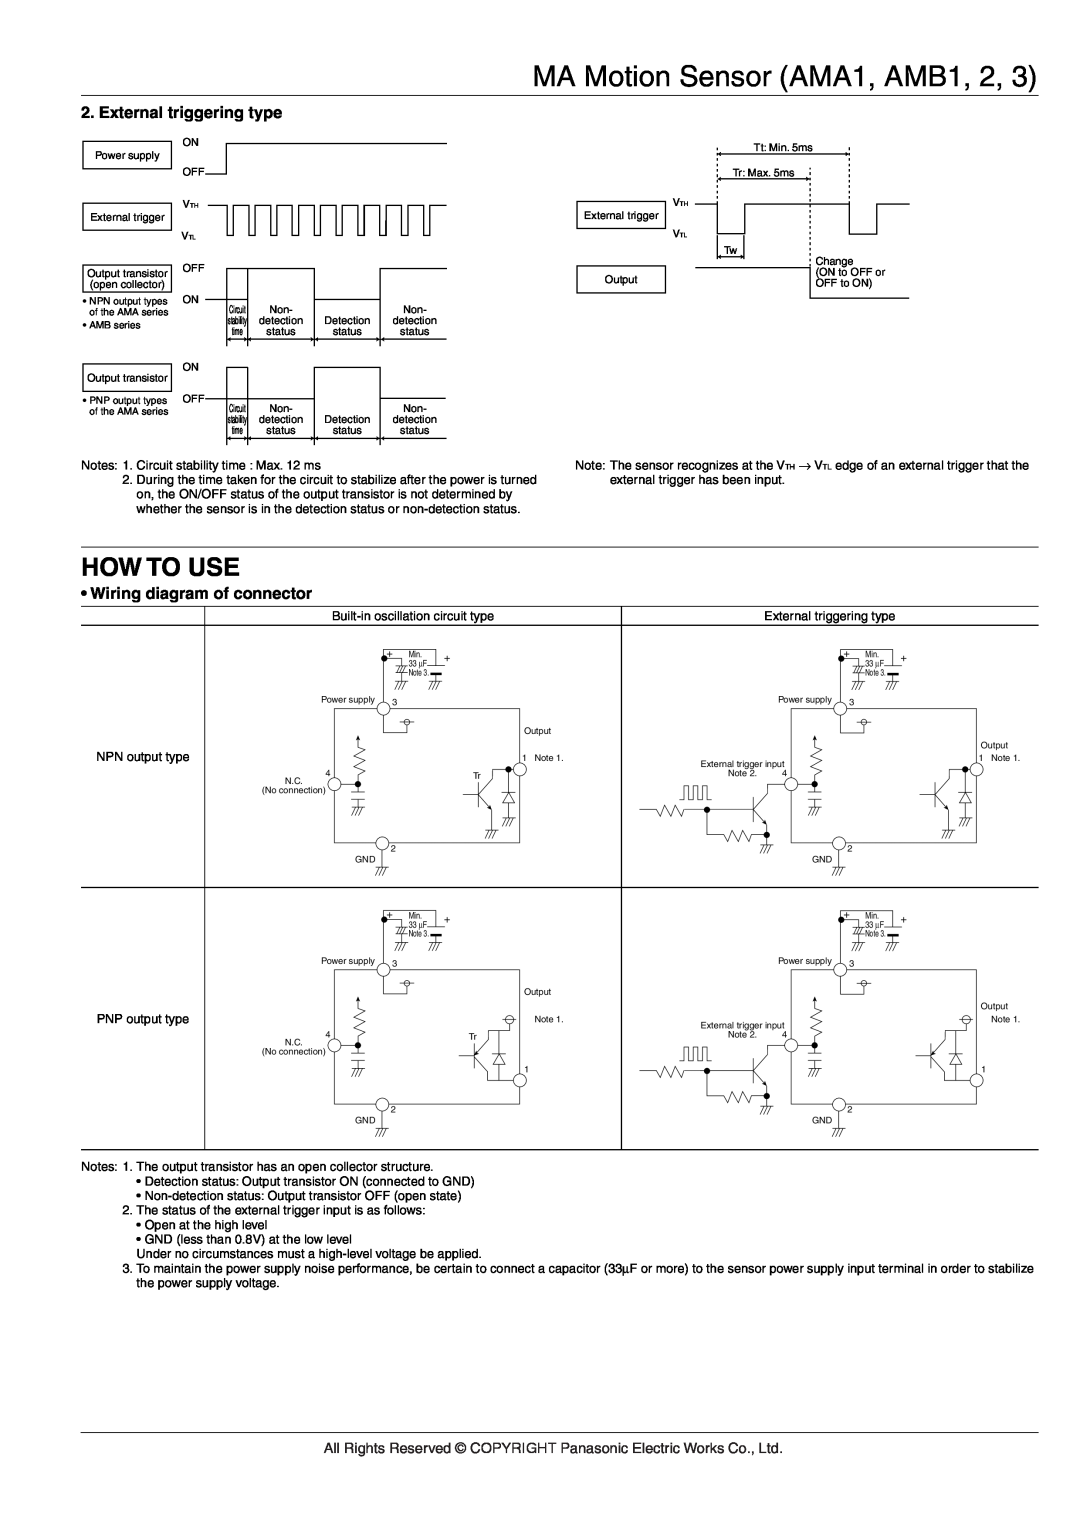 Panasonic Sensor Series How To Use, MA Motion Sensor AMA1, AMB1, External triggering type, Wiring diagram of connector 